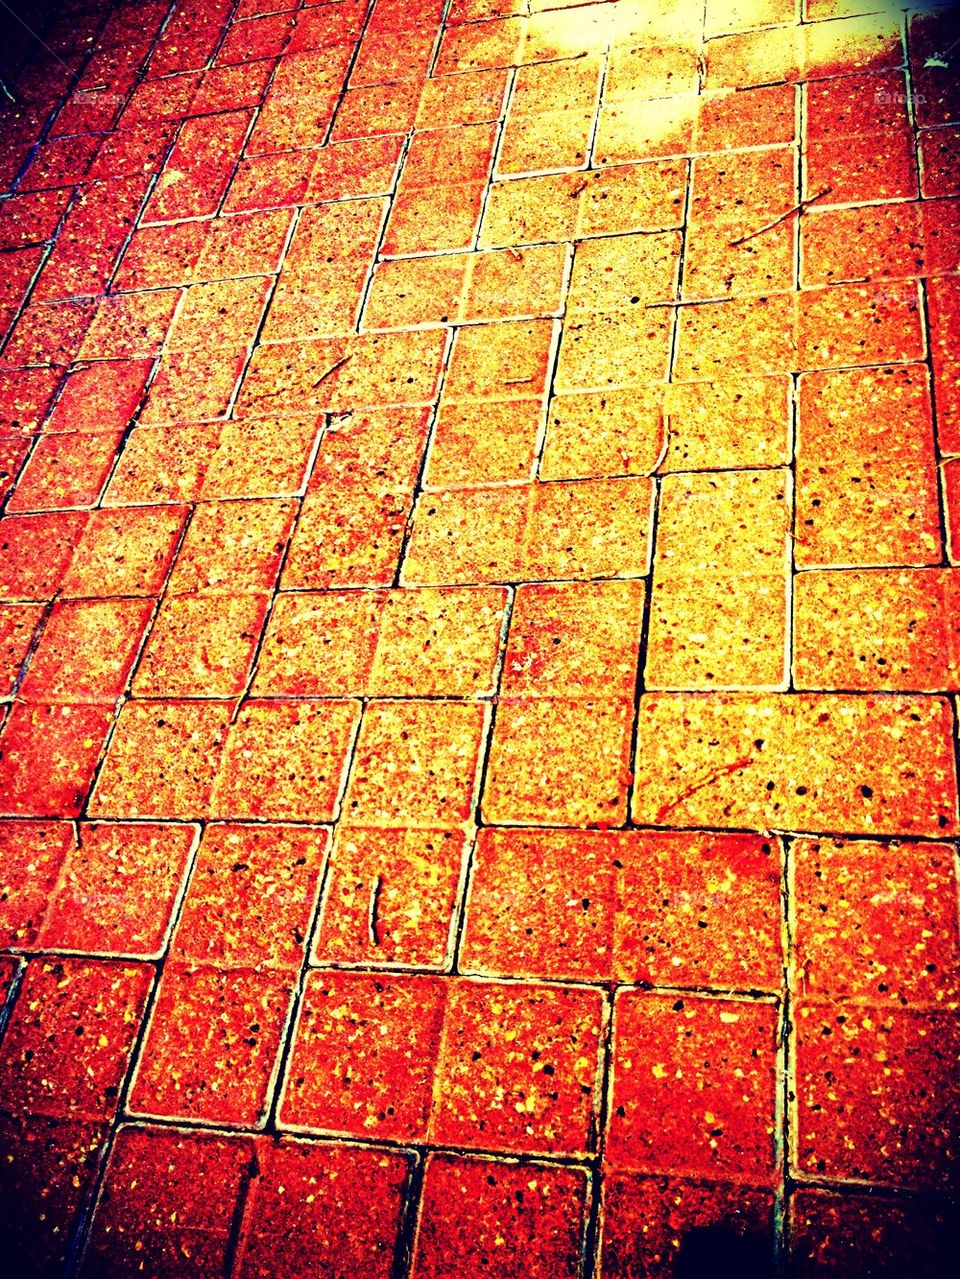 The Old Red Brick Sidewalk